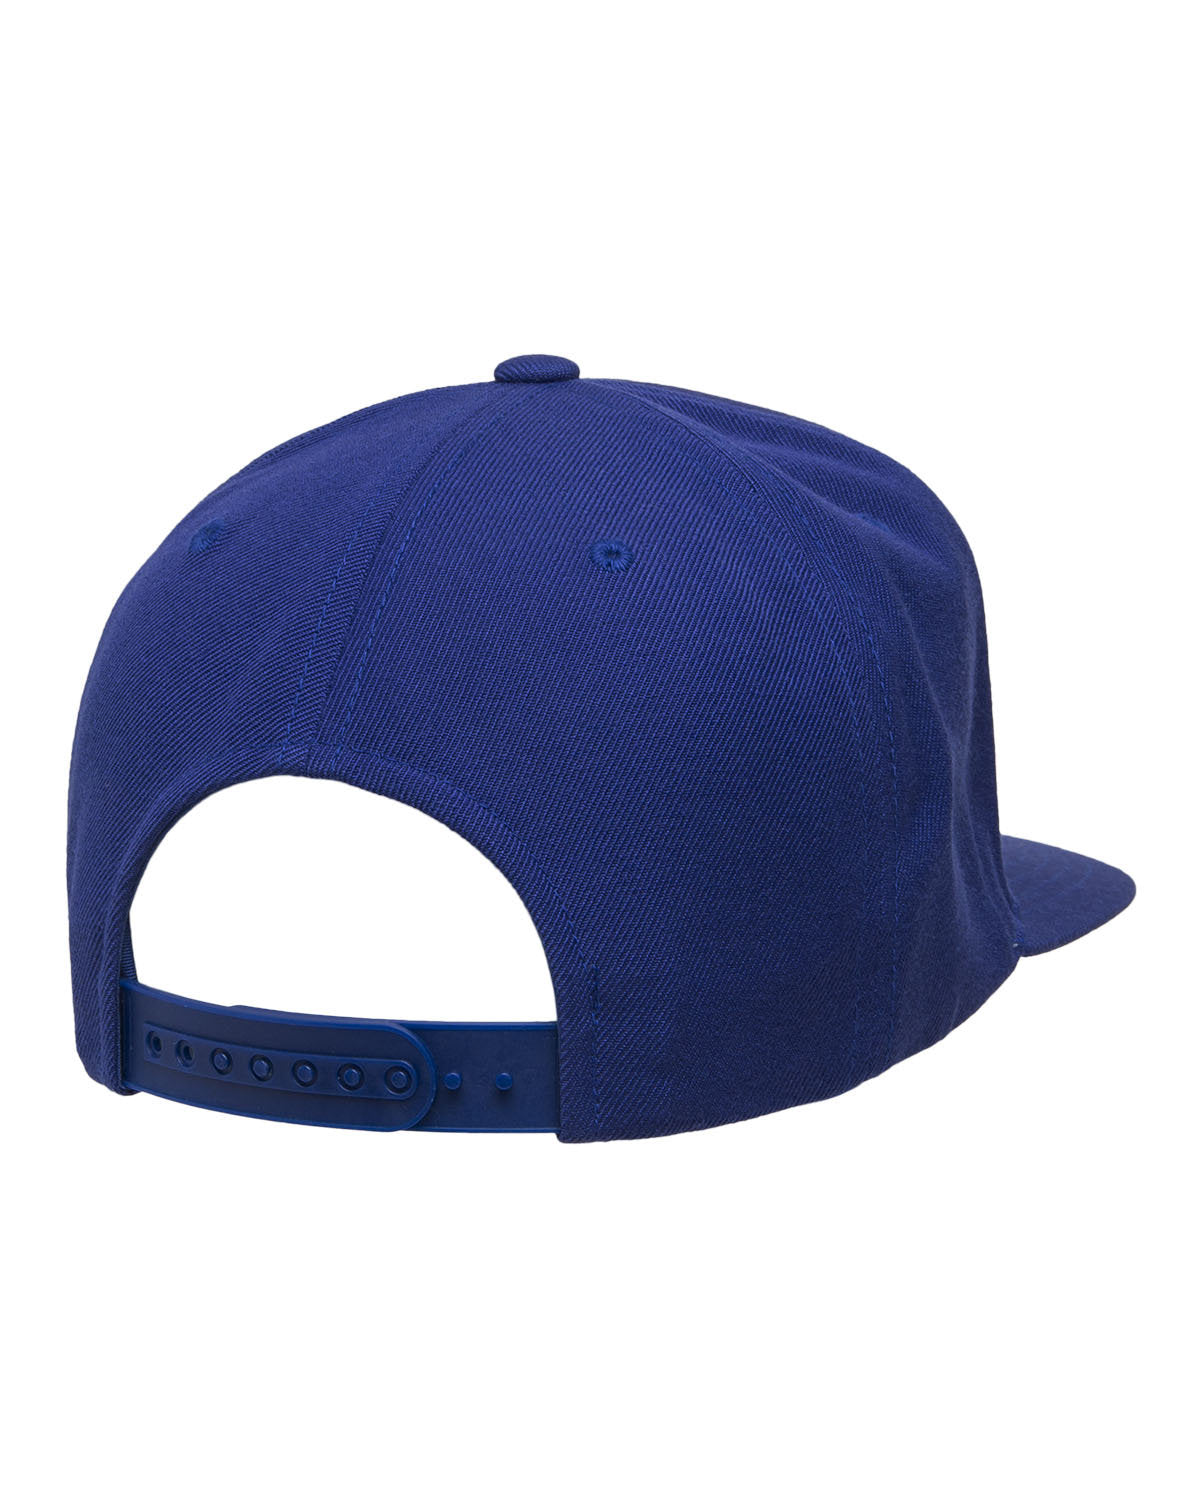 Yupoong Five-Panel Wool Blend Snapback Cap - Royal - Adjustable